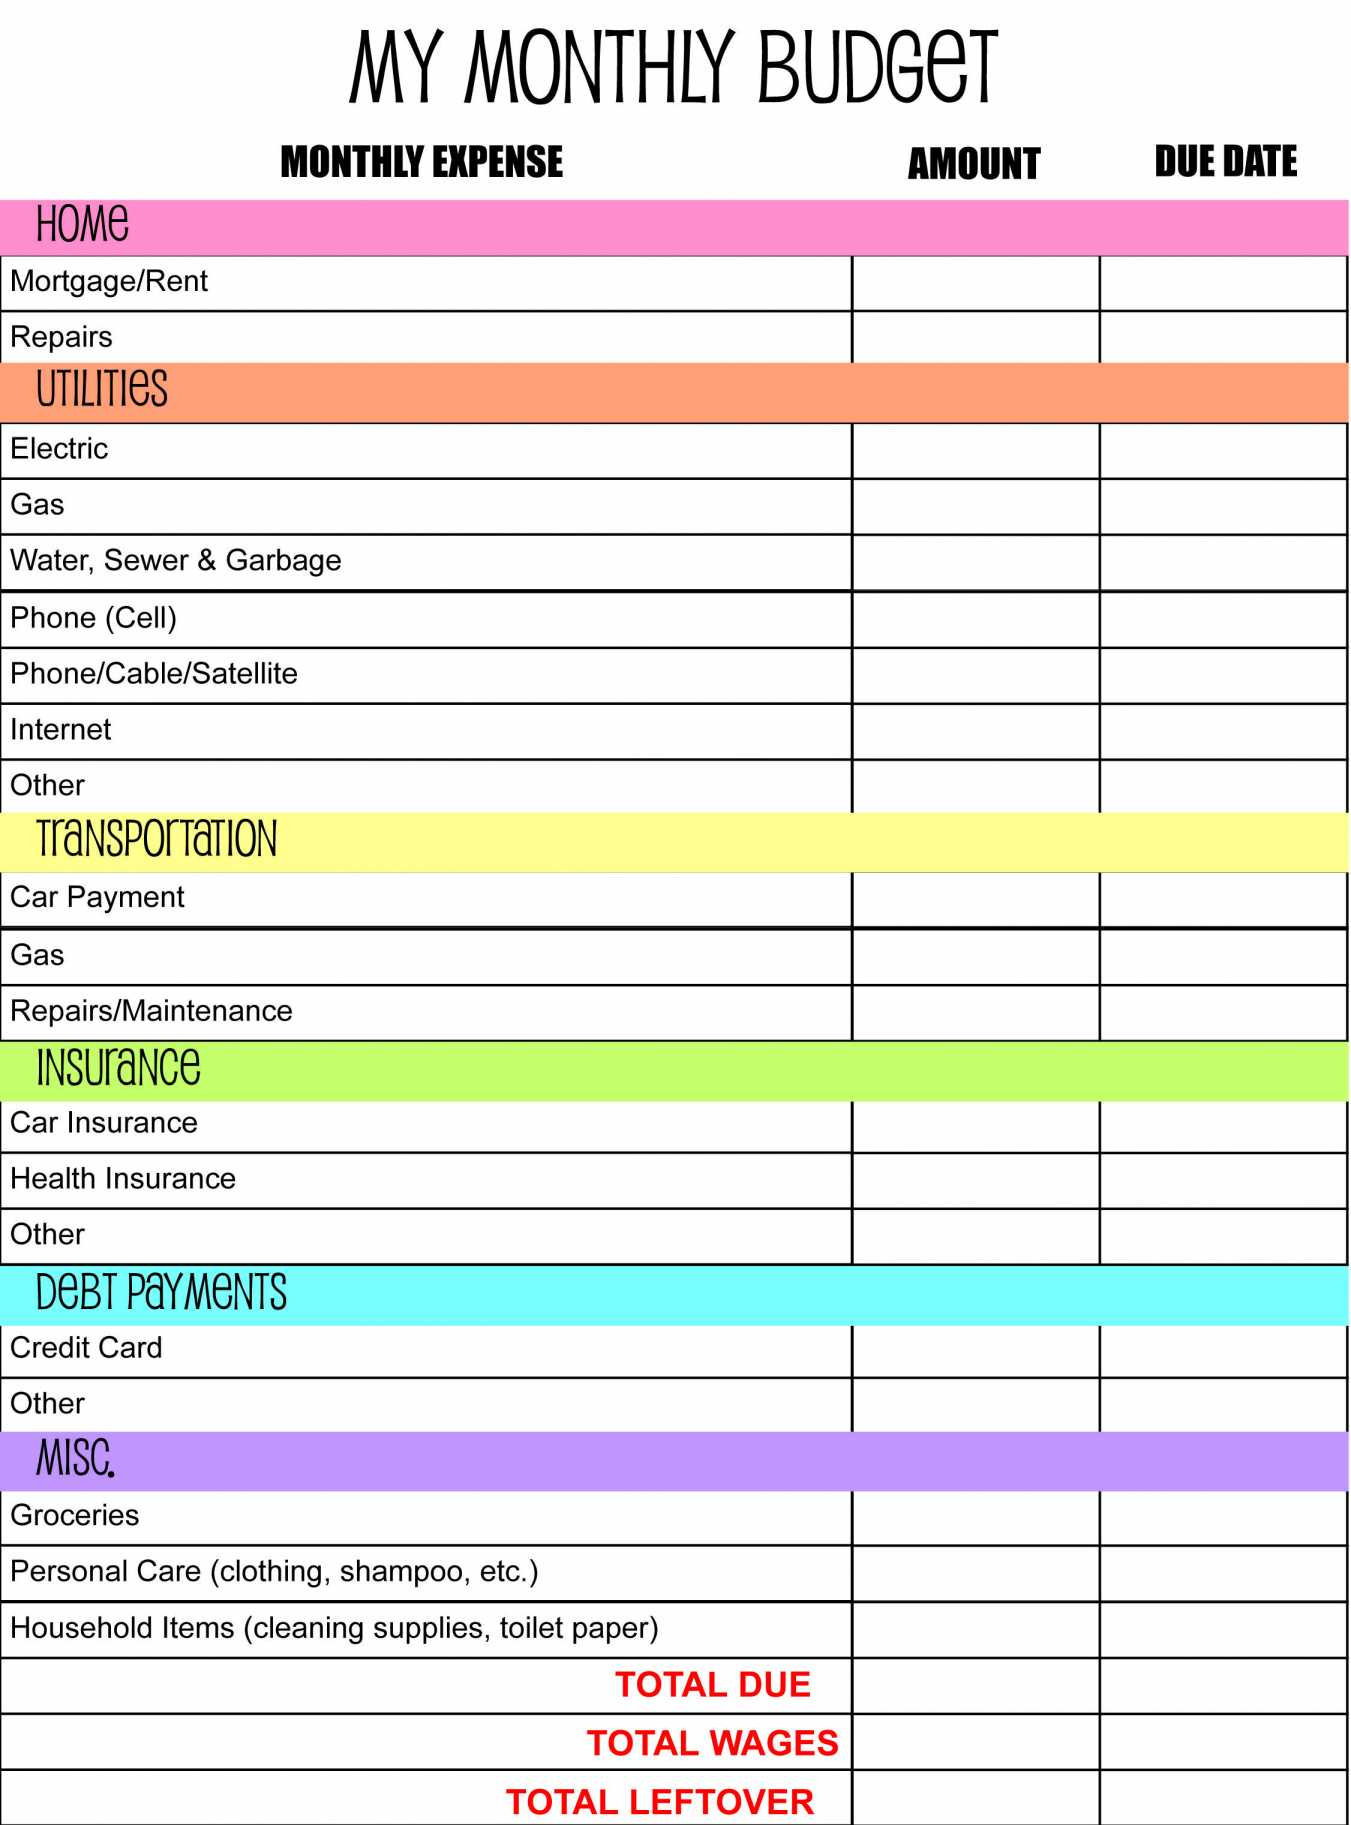 fresh-household-budget-calculator-spreadsheet-lancerules-worksheet